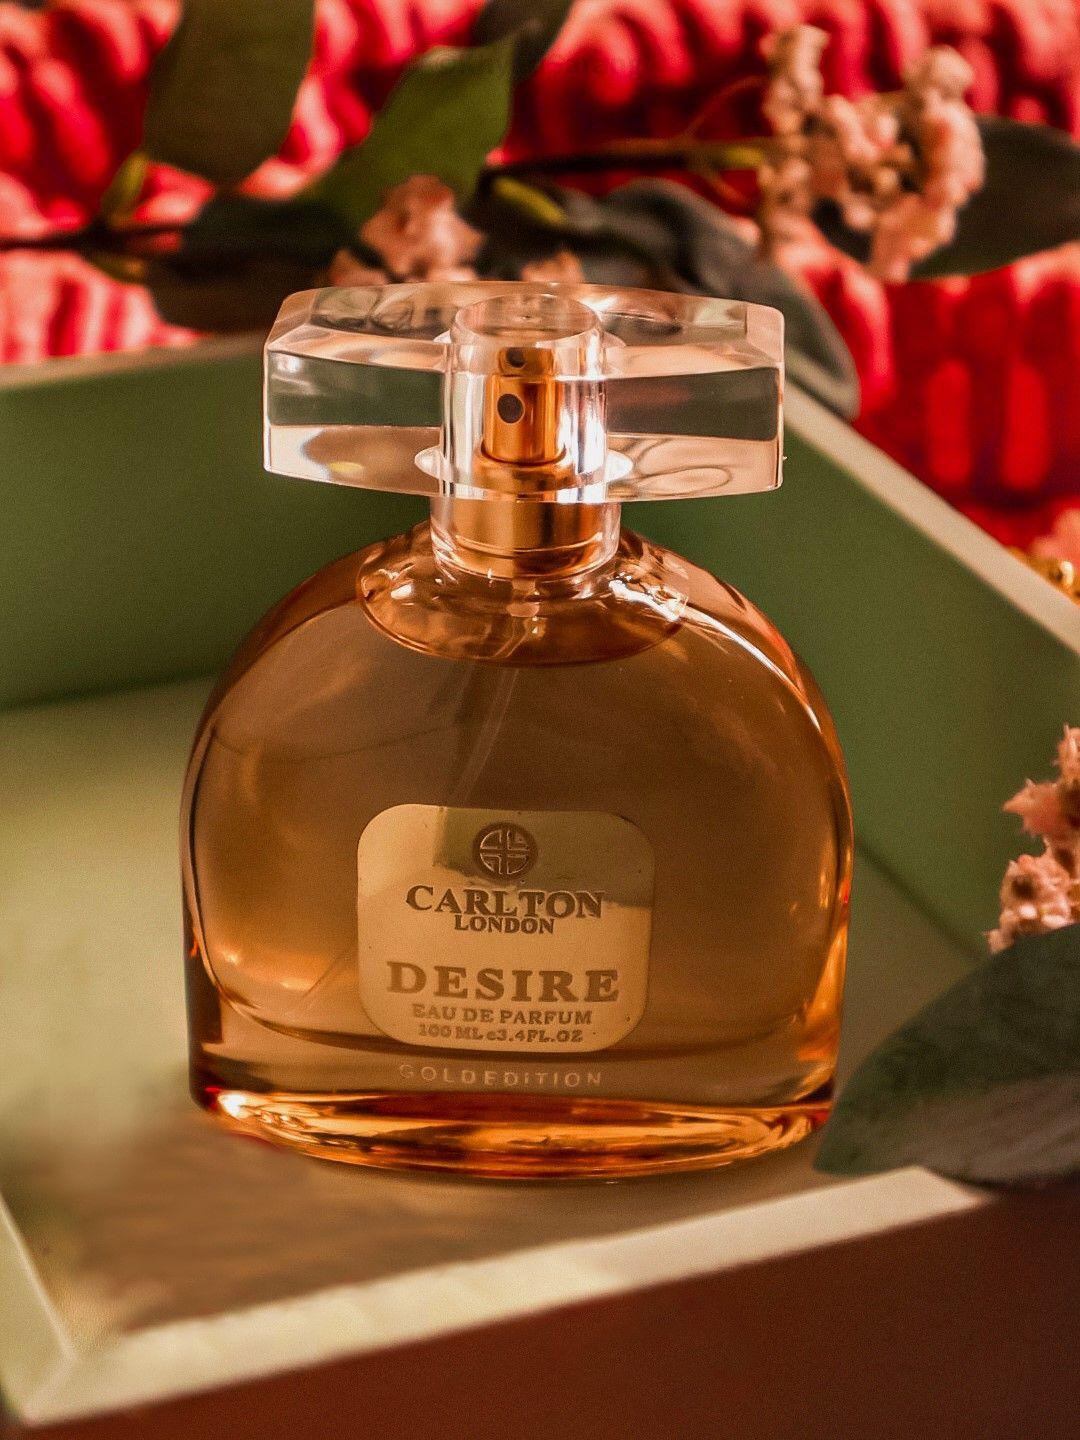 carlton london women gold edition desire eau de parfum - 100 ml